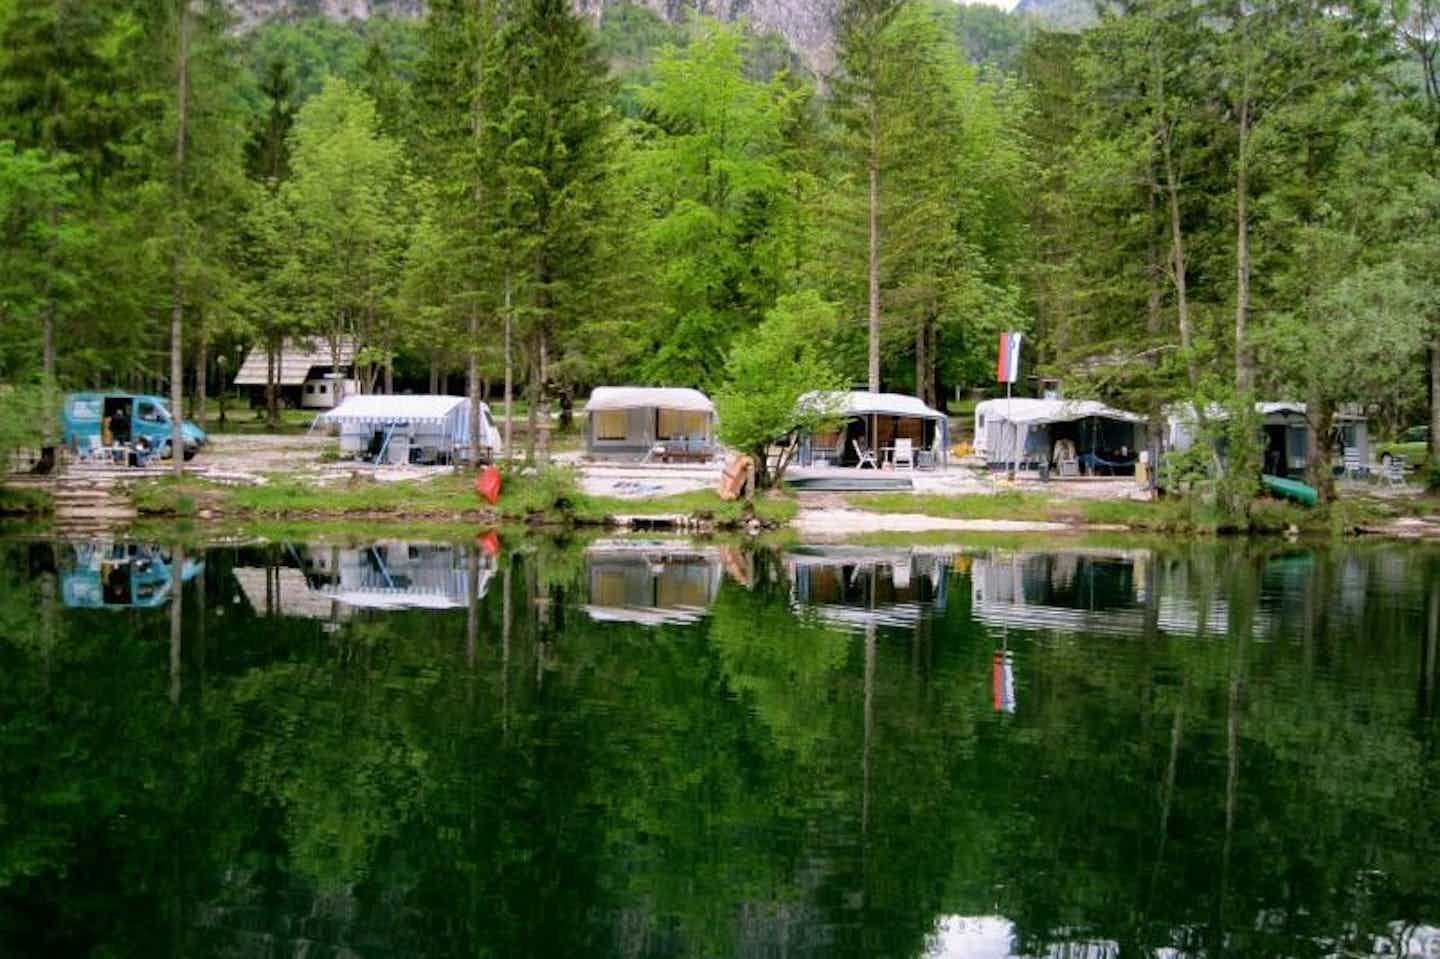 Camp Bohinj